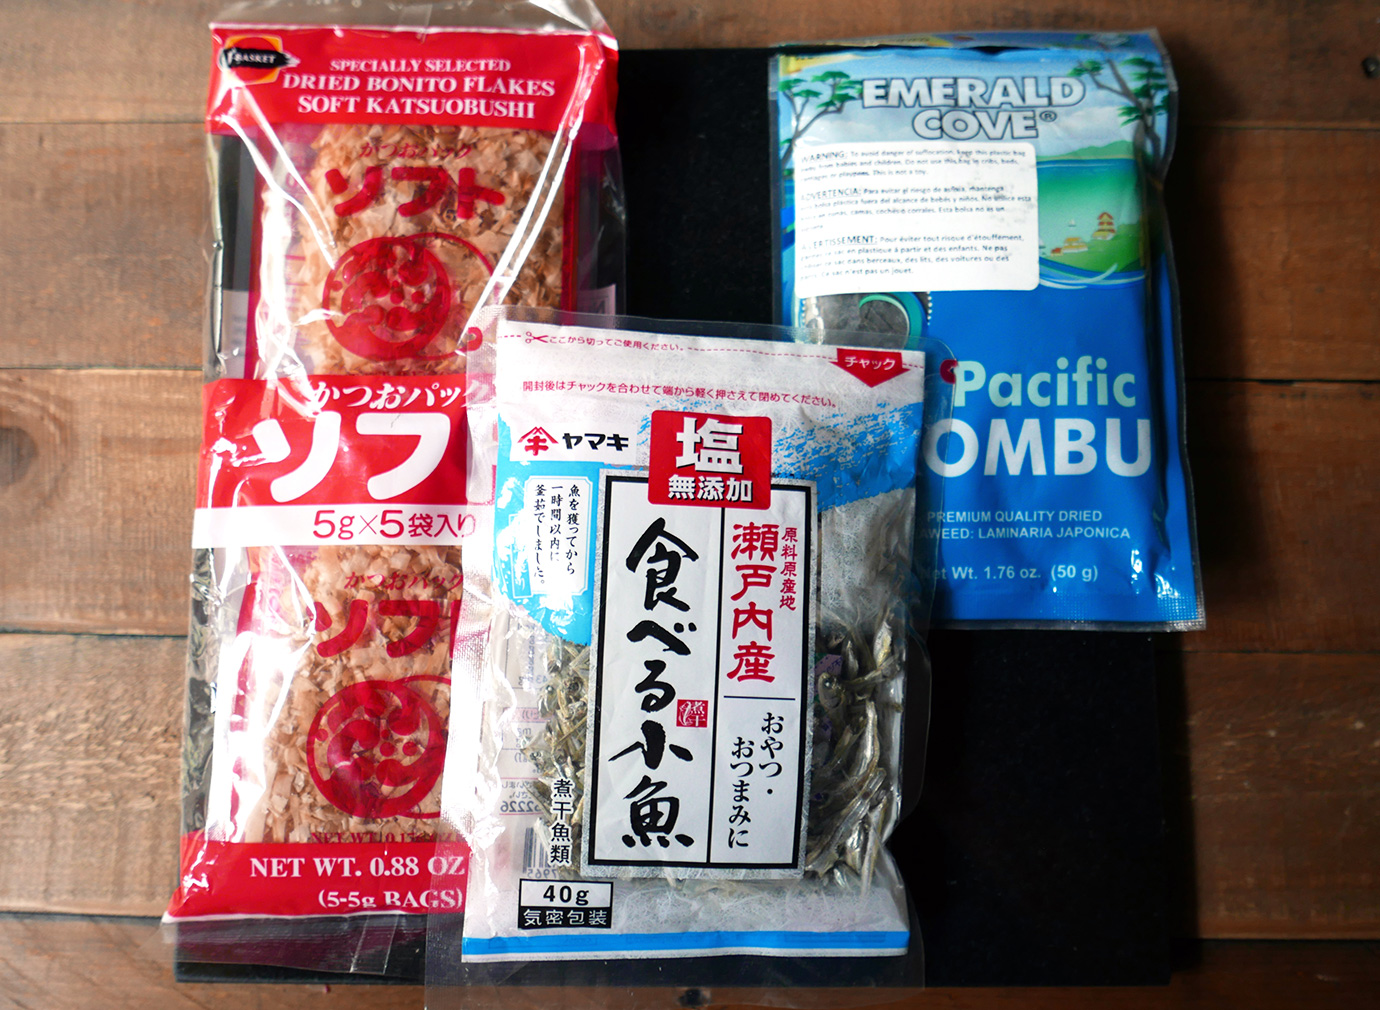 katsuobushi in package